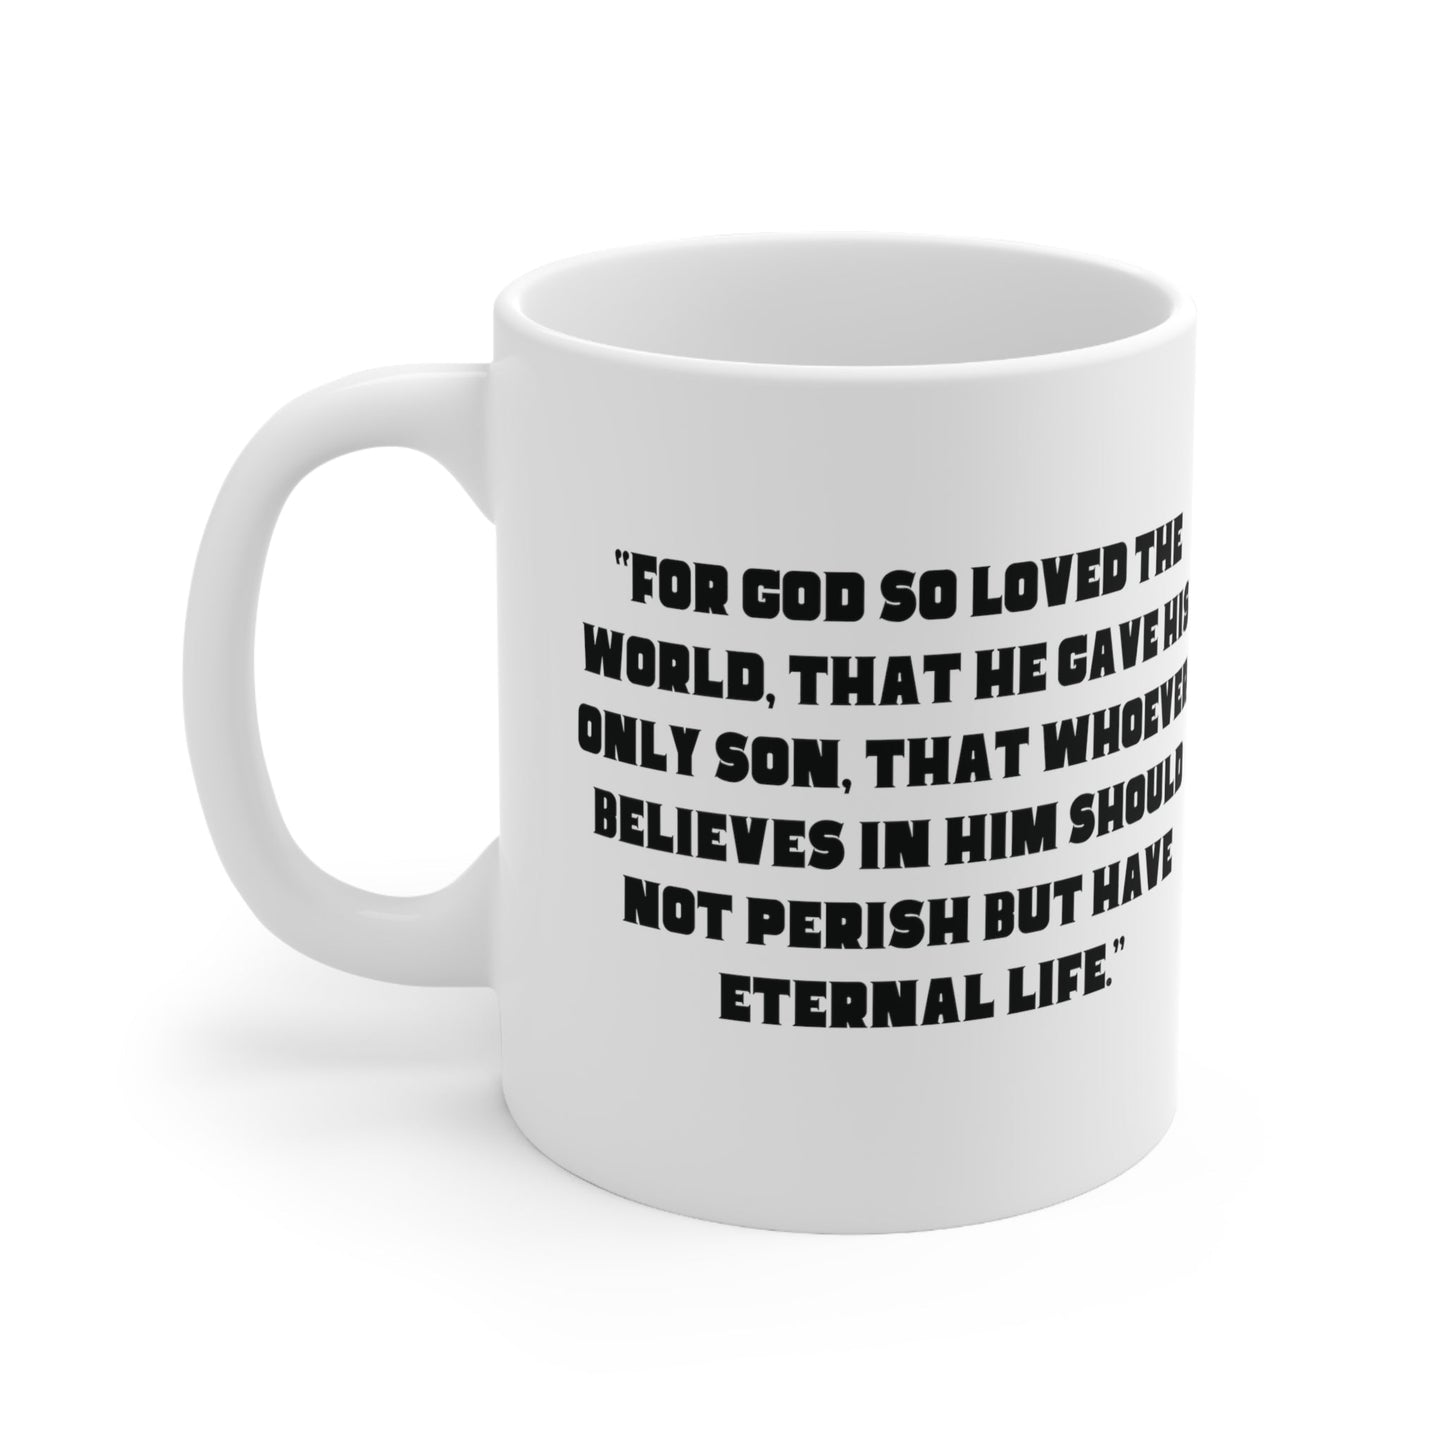 John 3:16 Coffee Mug | Moikas Christian Coffee Mug - Moikas